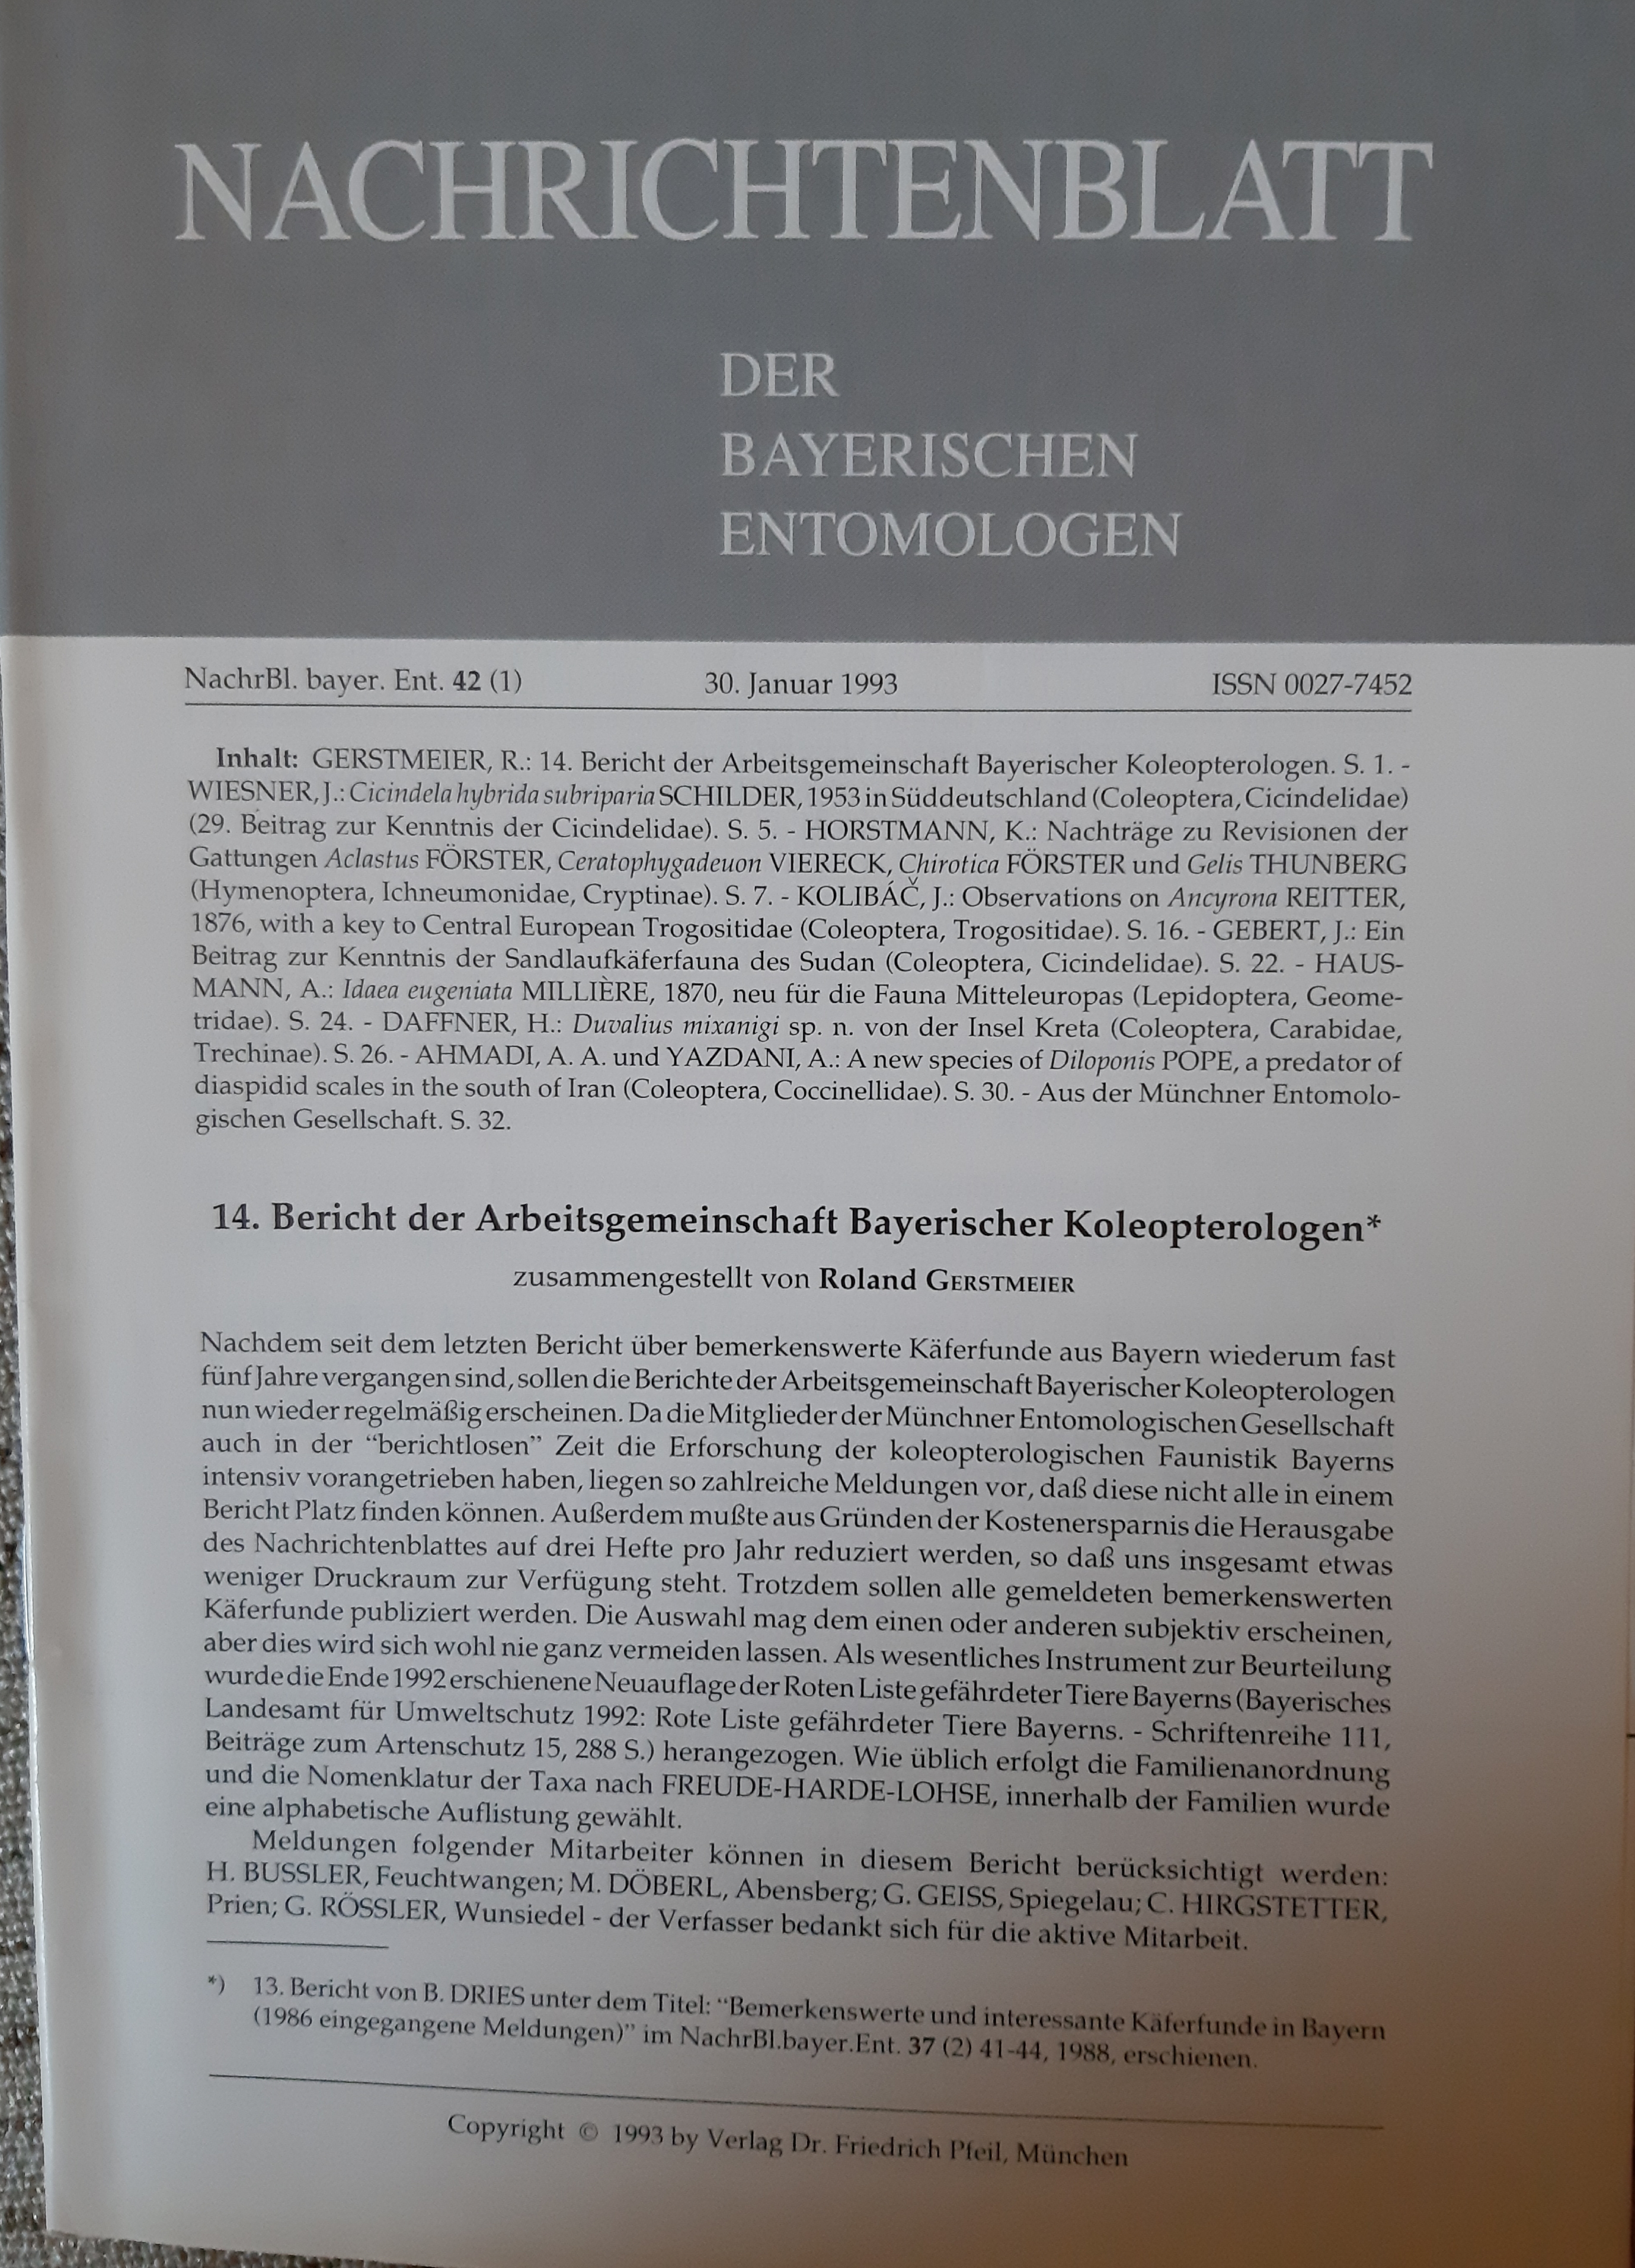 Nachrichtenblatt der Bayerischen Entomologen 1993/42. évf. 1. szám (Rippl-Rónai Múzeum RR-F)